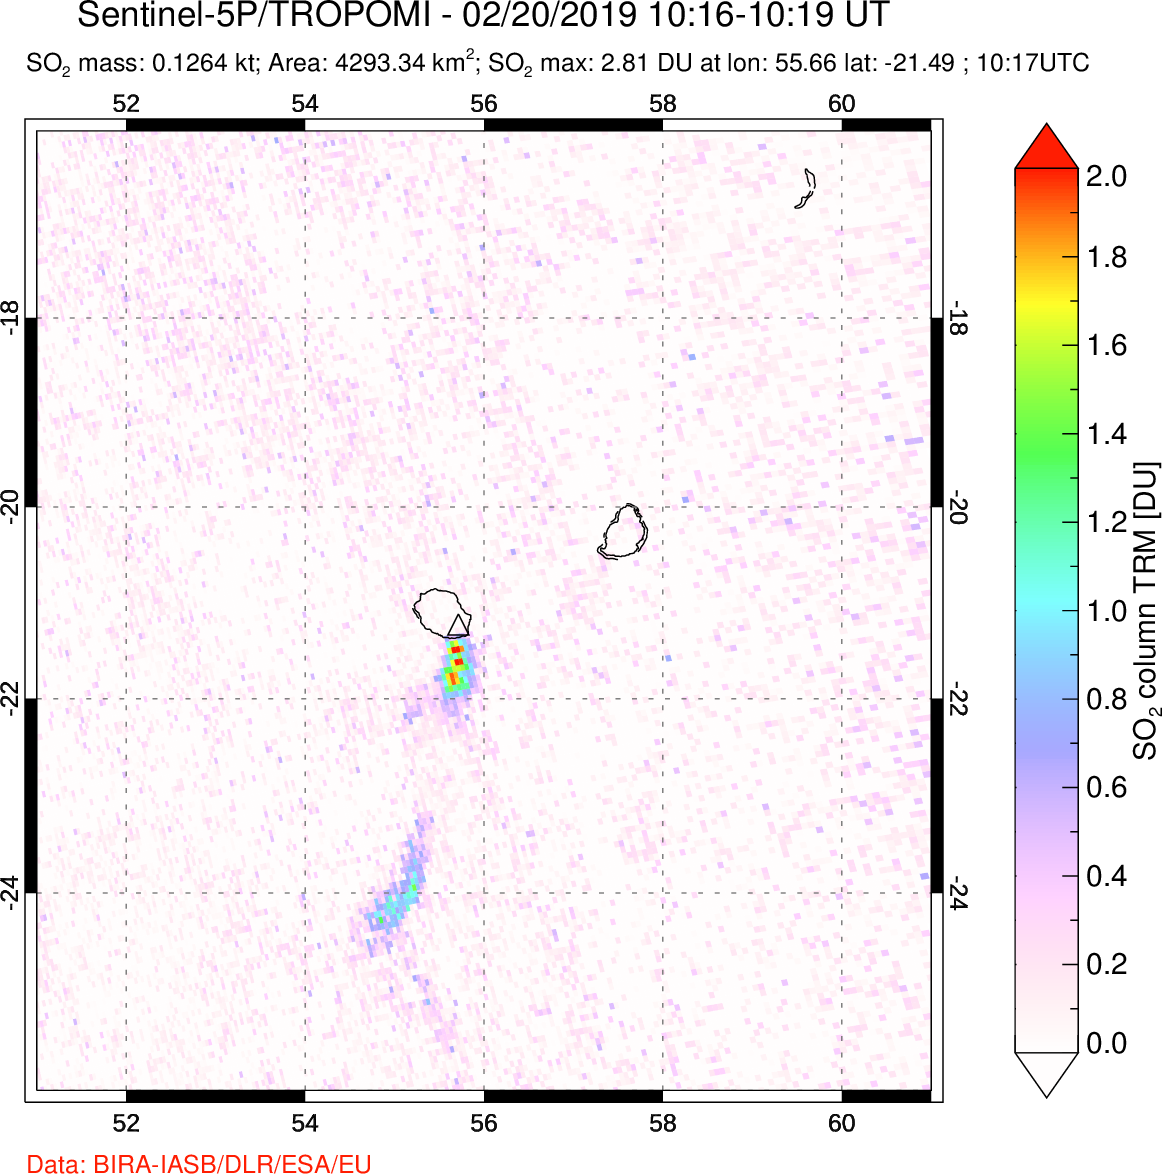 A sulfur dioxide image over Reunion Island, Indian Ocean on Feb 20, 2019.